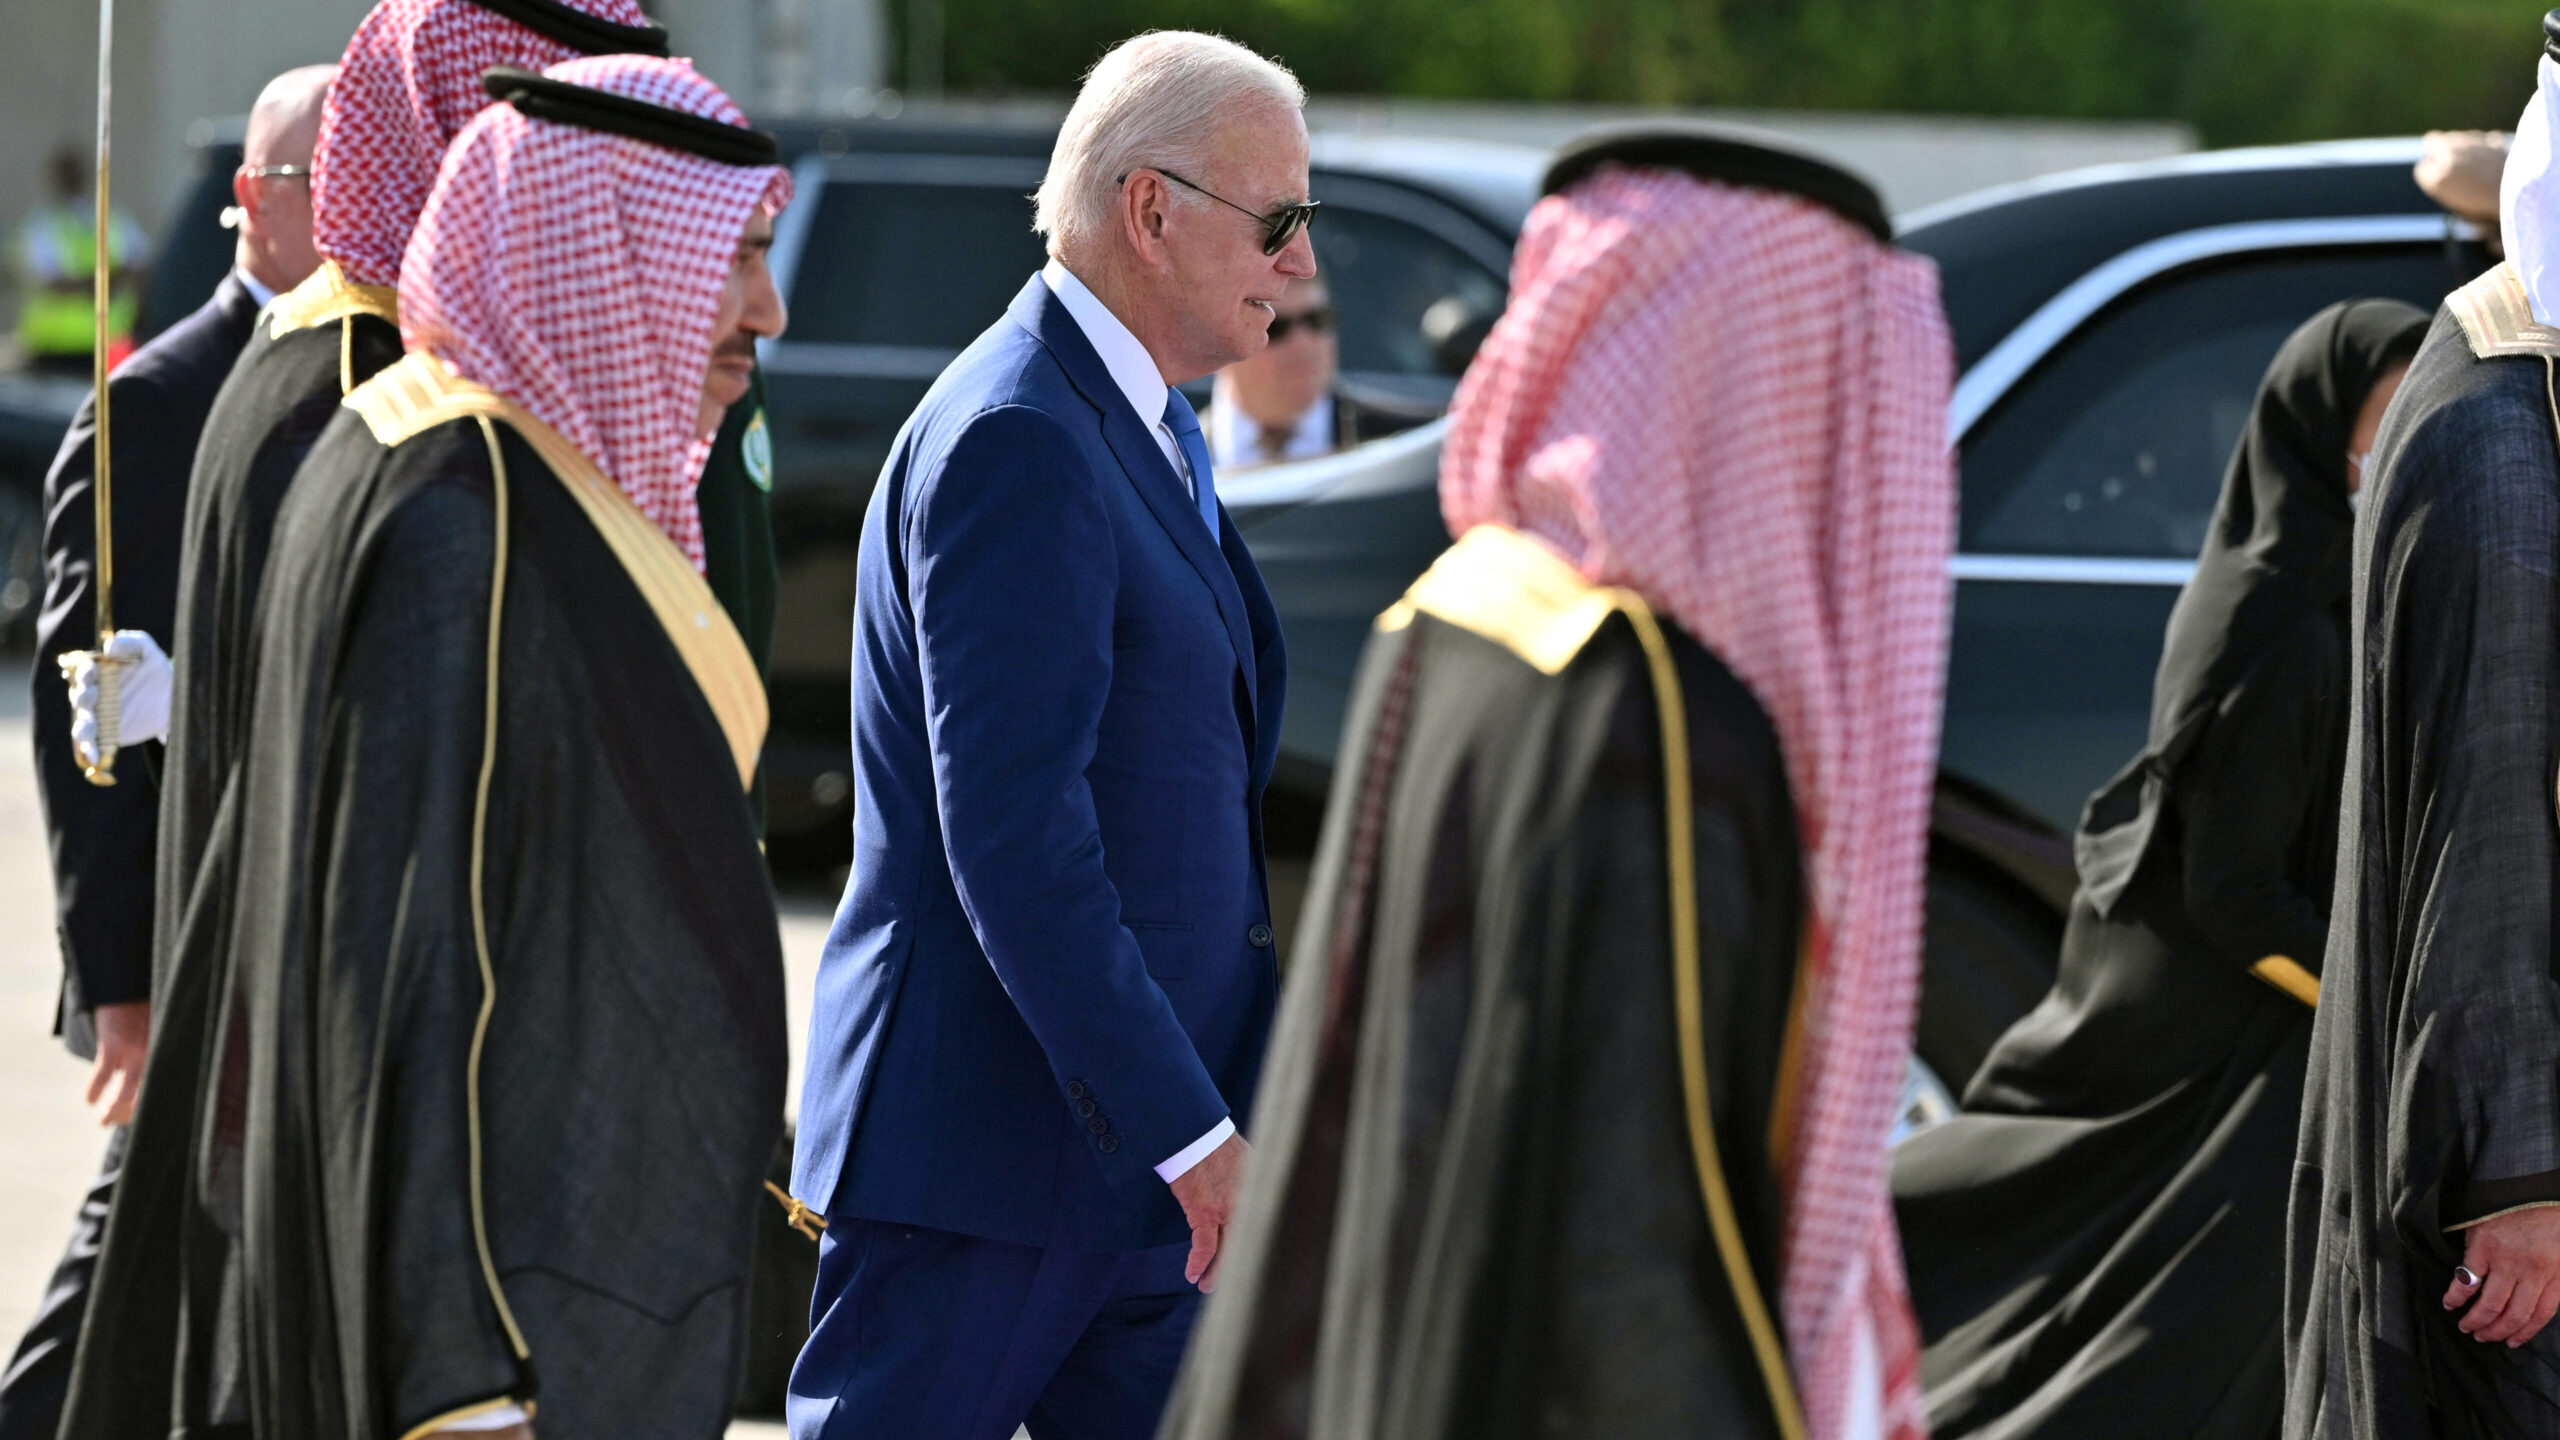 Any Saudi-Israeli normalization requires clearing major security, defense roadblocks: Experts